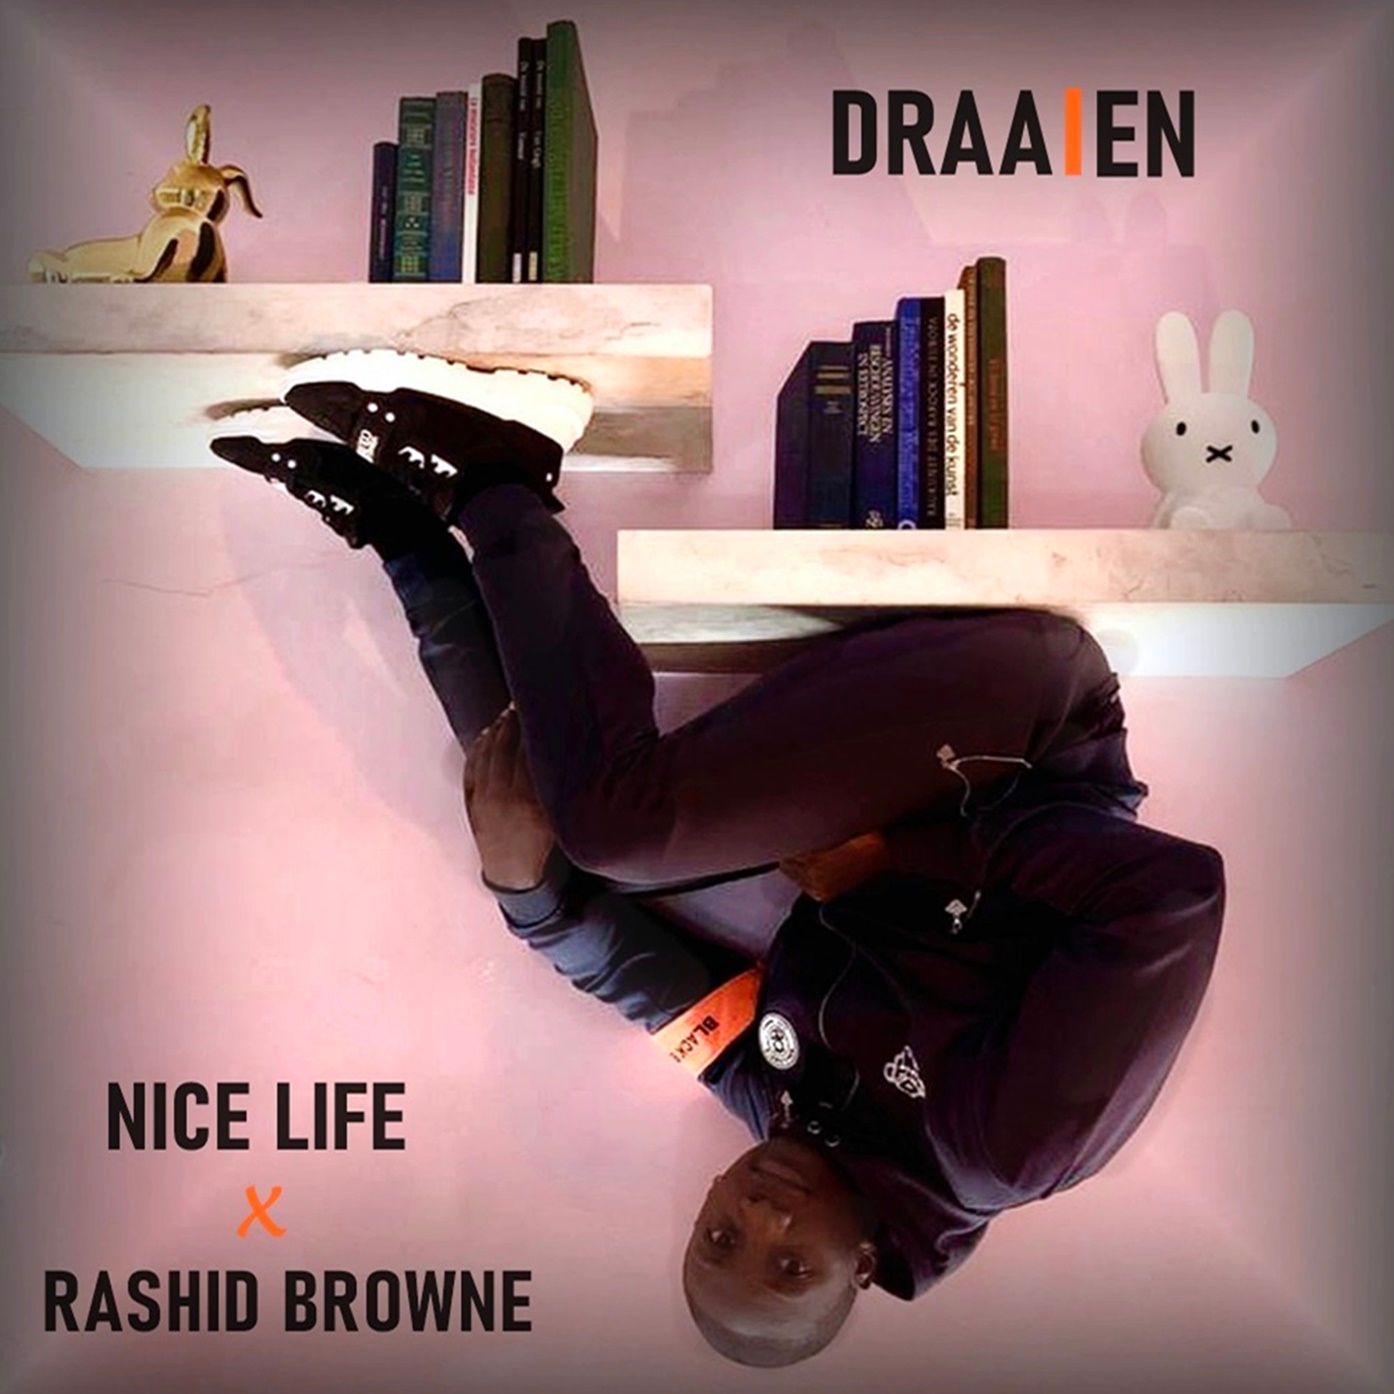 Stiahnuť ▼ Draaien  - Nice Life x Rashid Browne